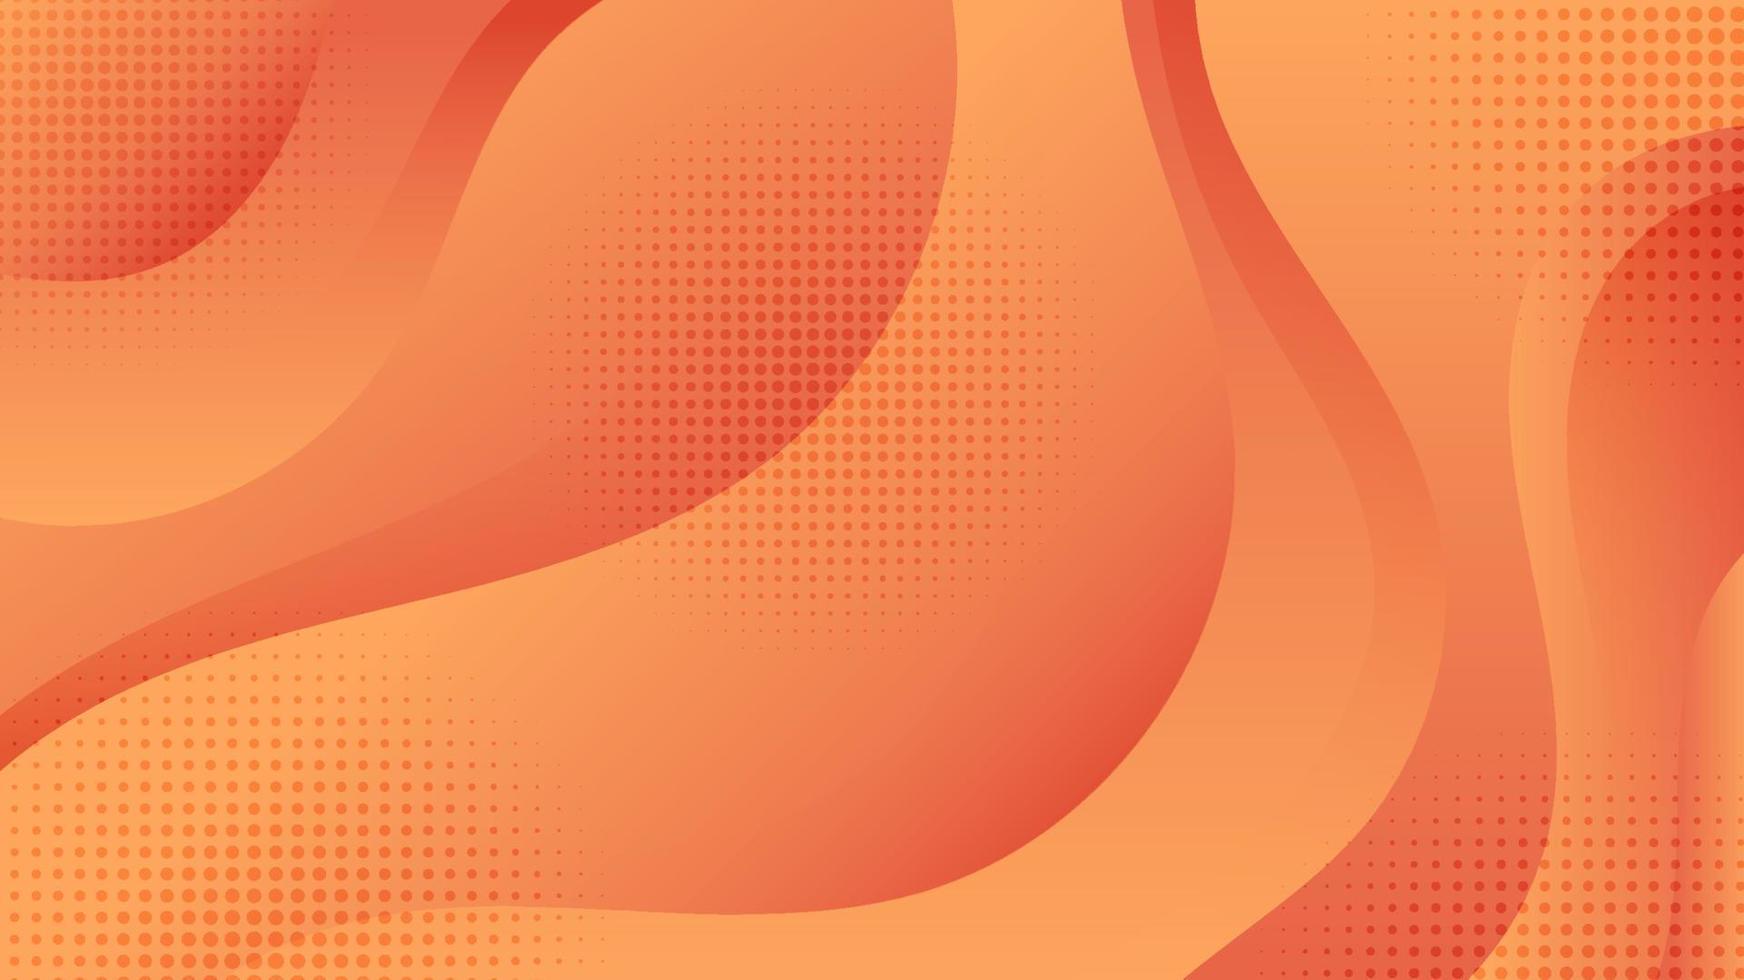 abstrakt orange vågform överlappande lager med halvtonseffekt bakgrundspapper konst stil vektor